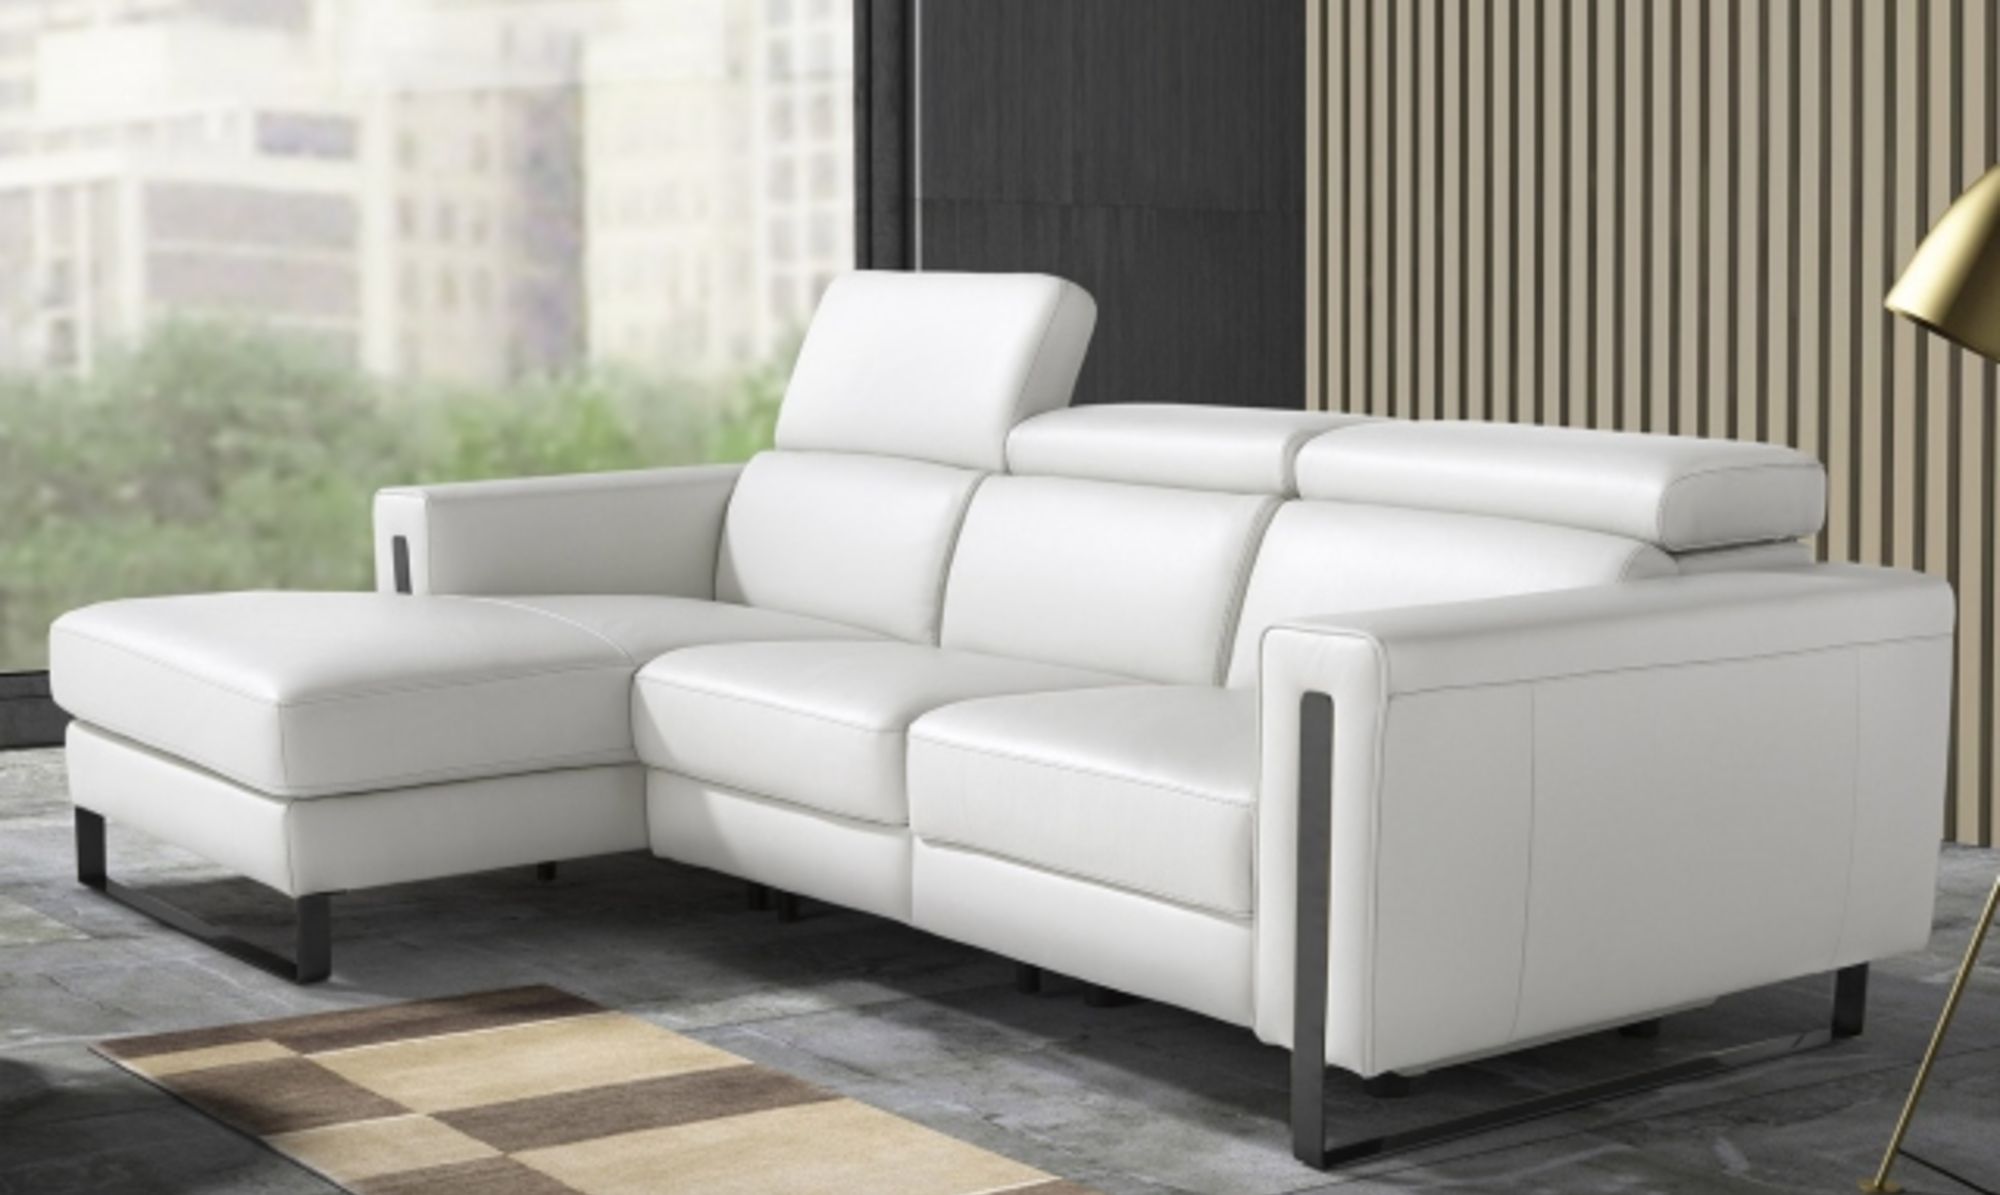 White Leather Sofa Fishpools Lifestyle, Contemporary White Leather Sofas